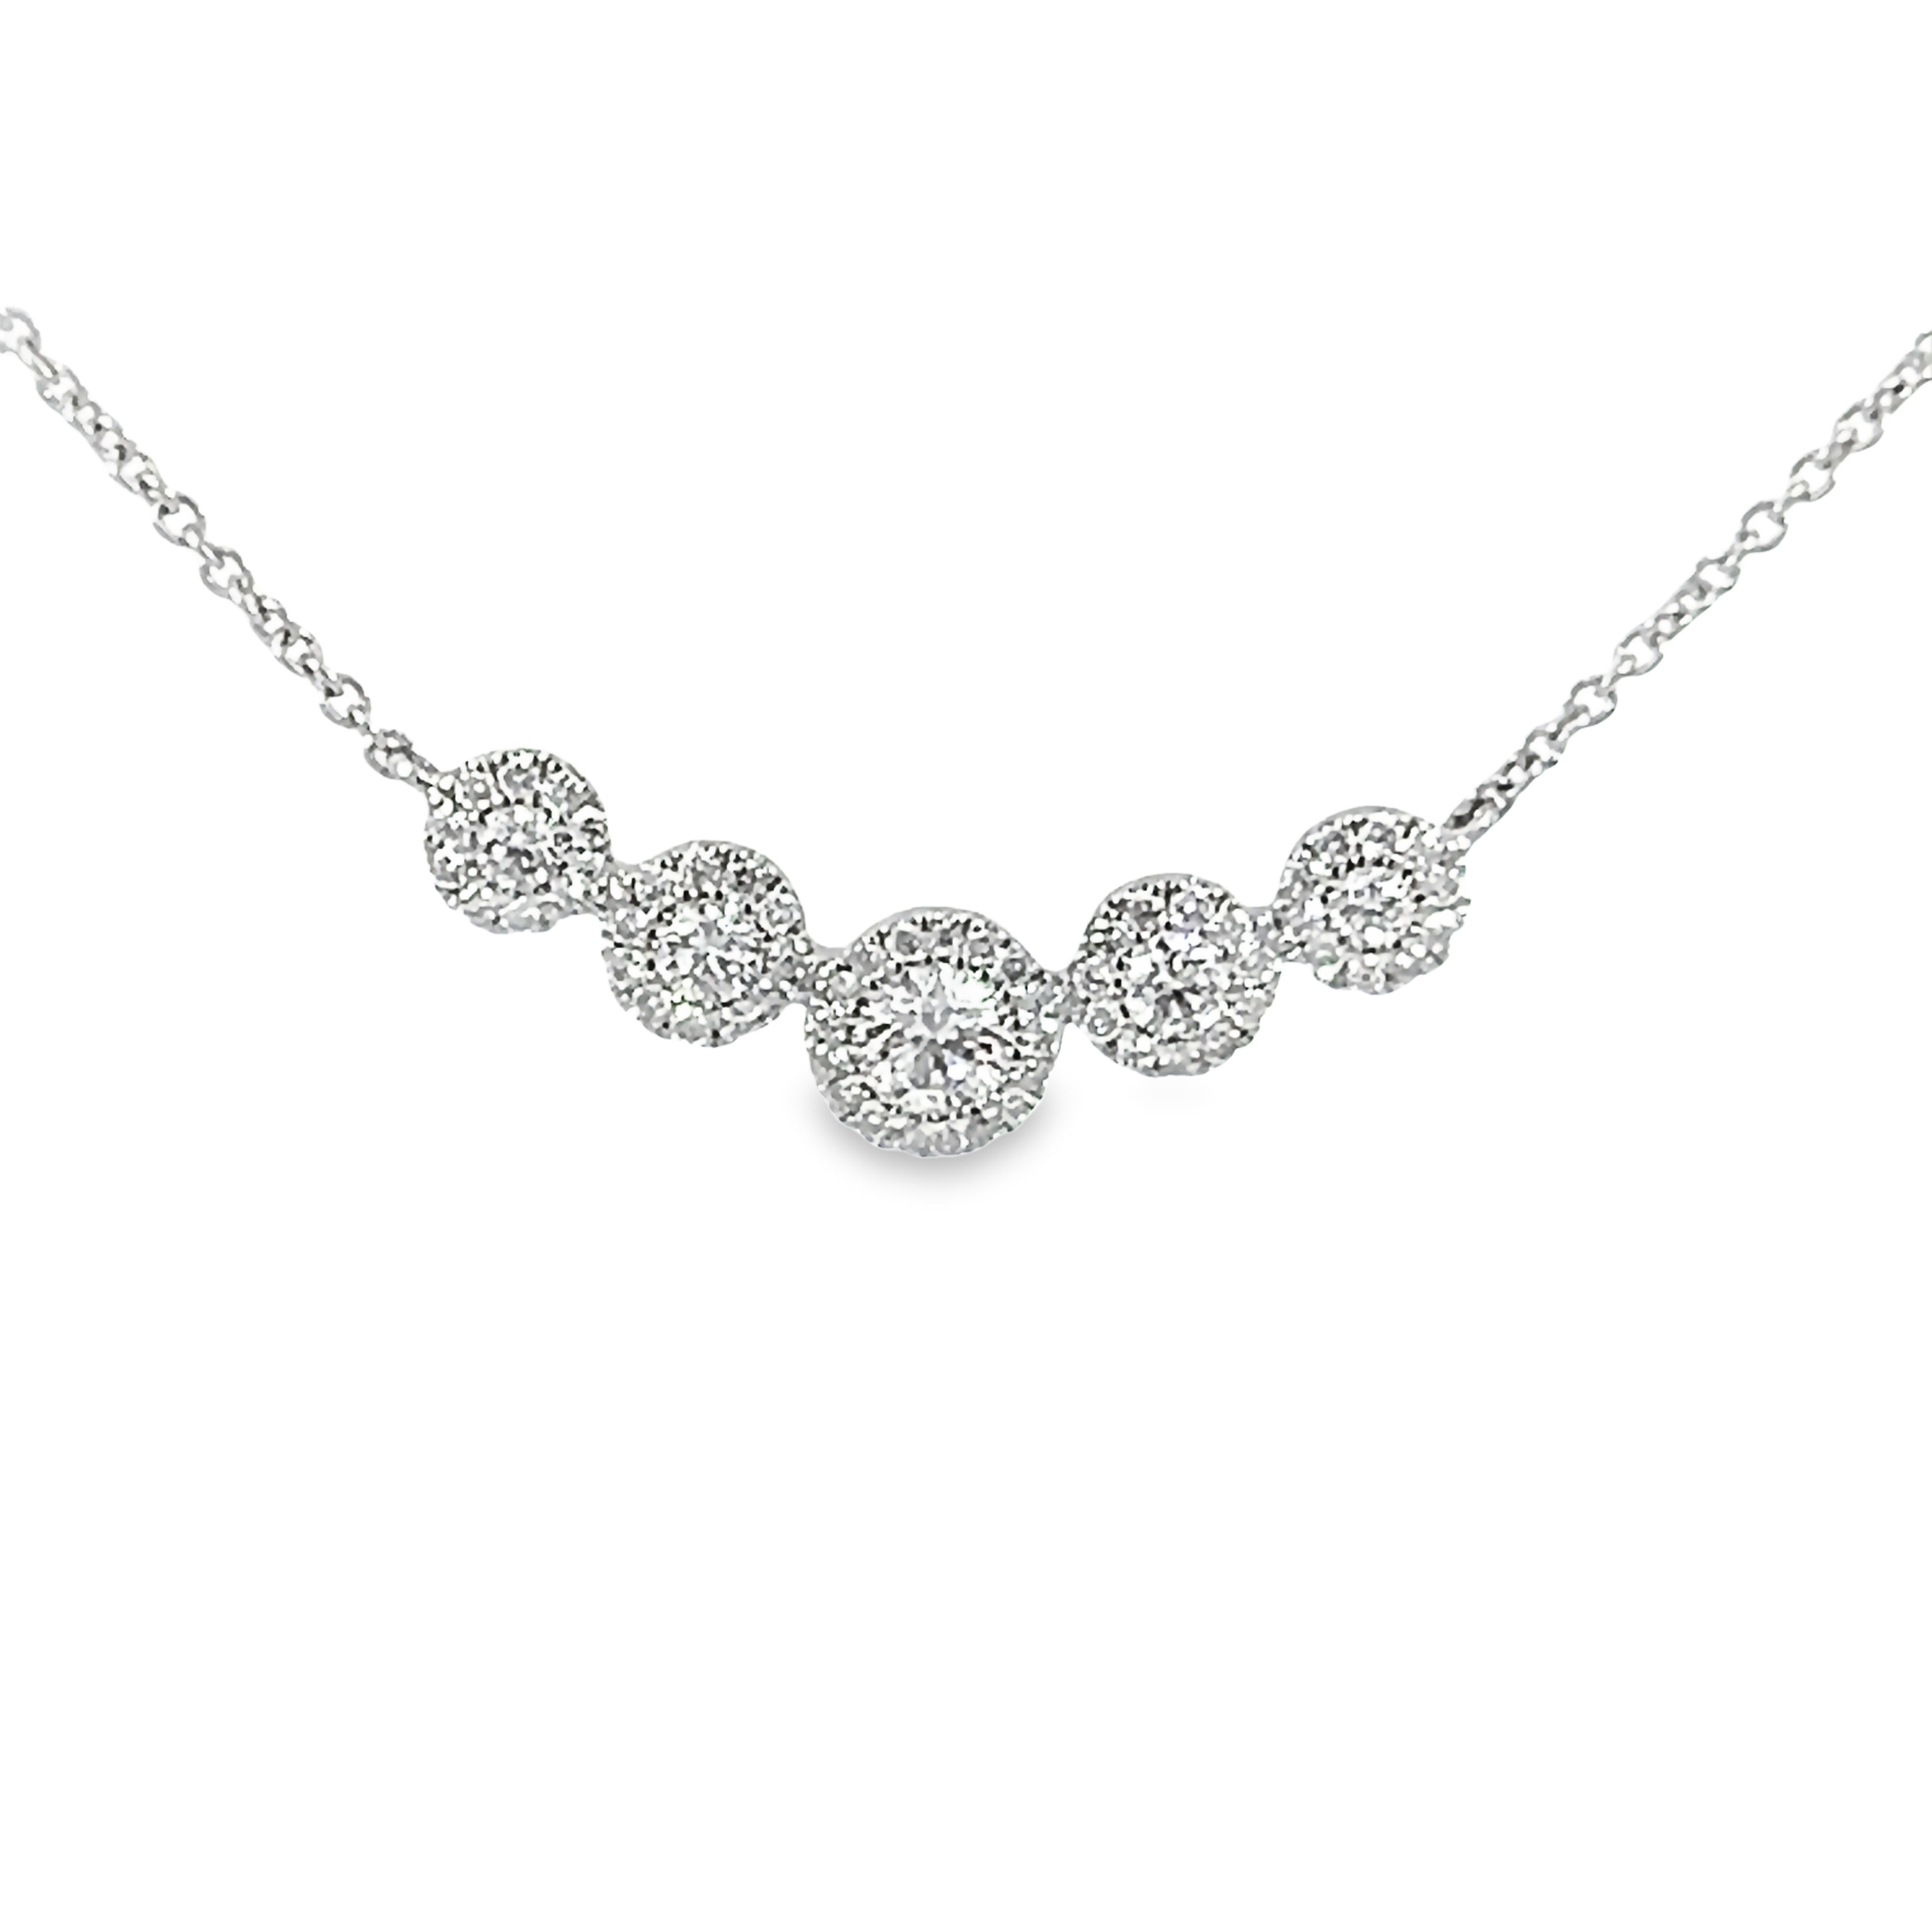 14k White Gold Diamond Halo Cluster Necklace